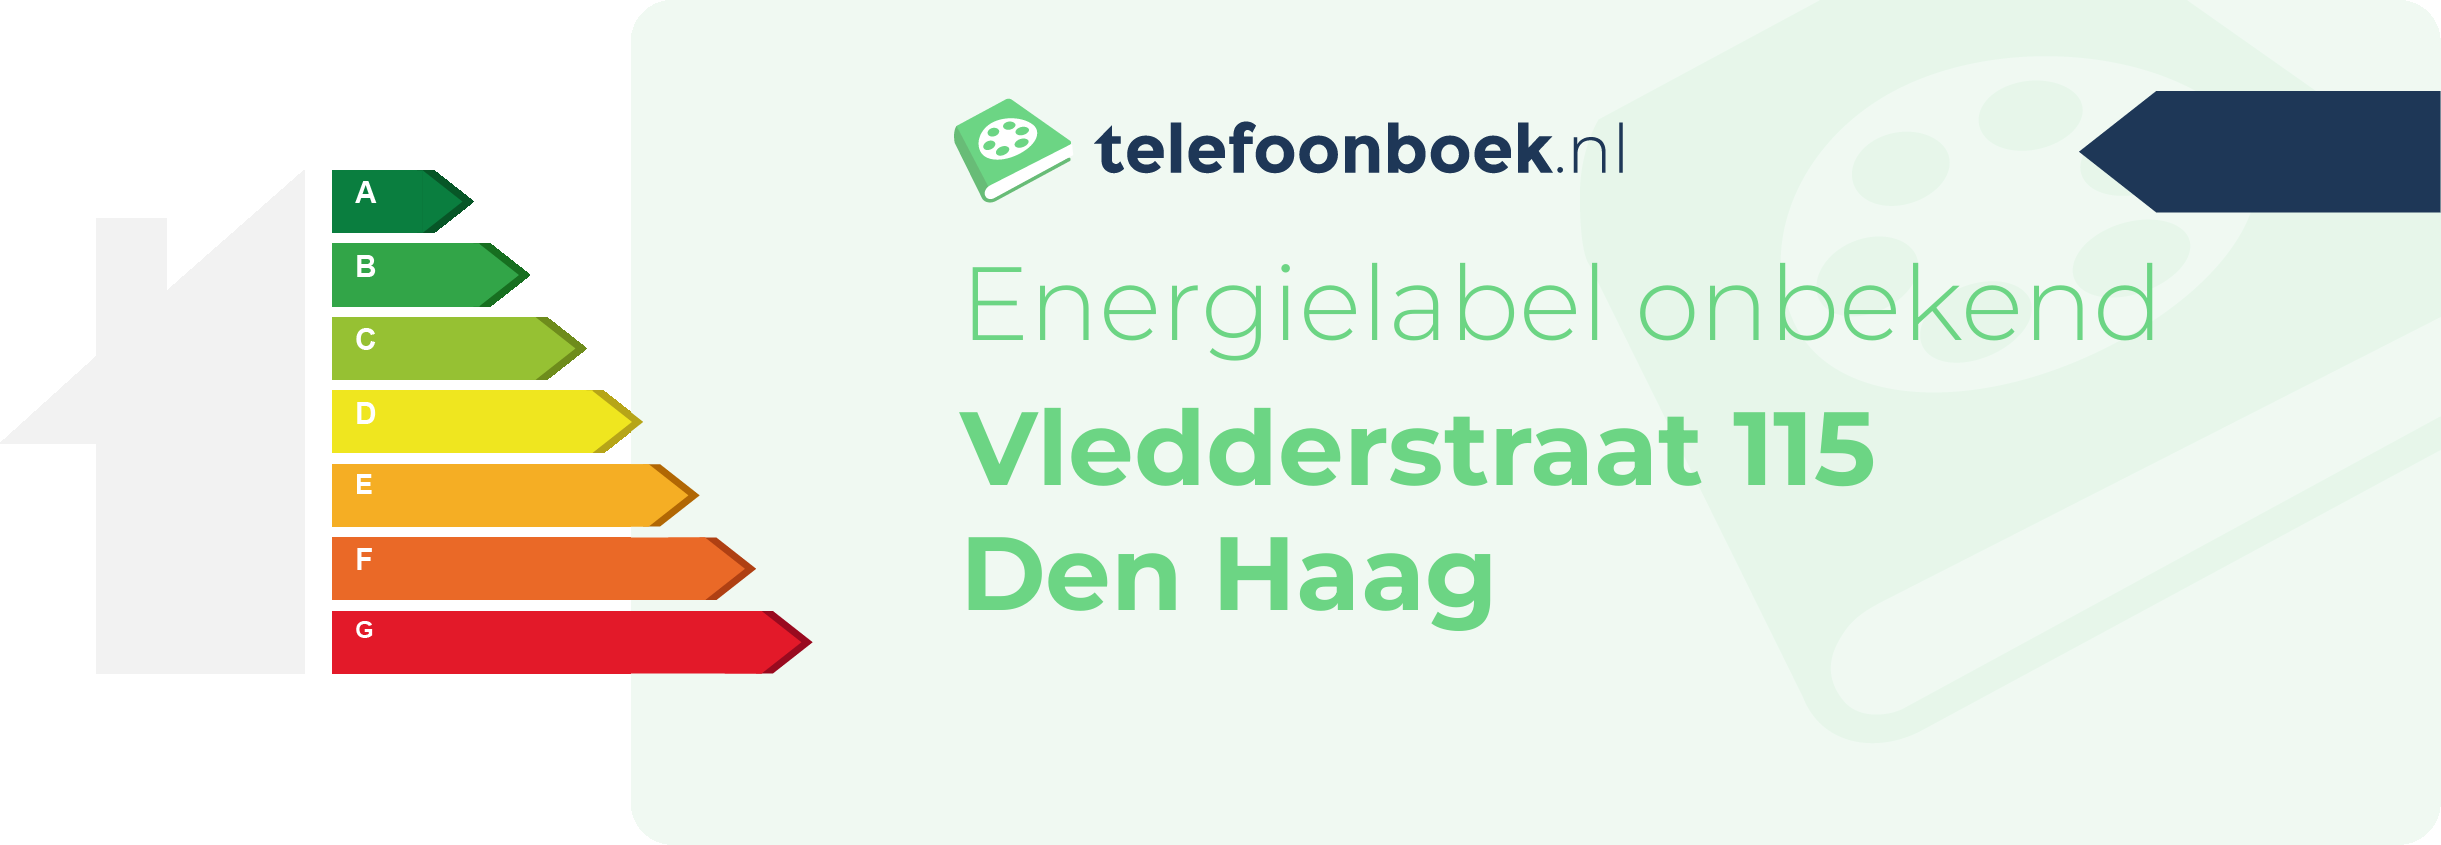 Energielabel Vledderstraat 115 Den Haag